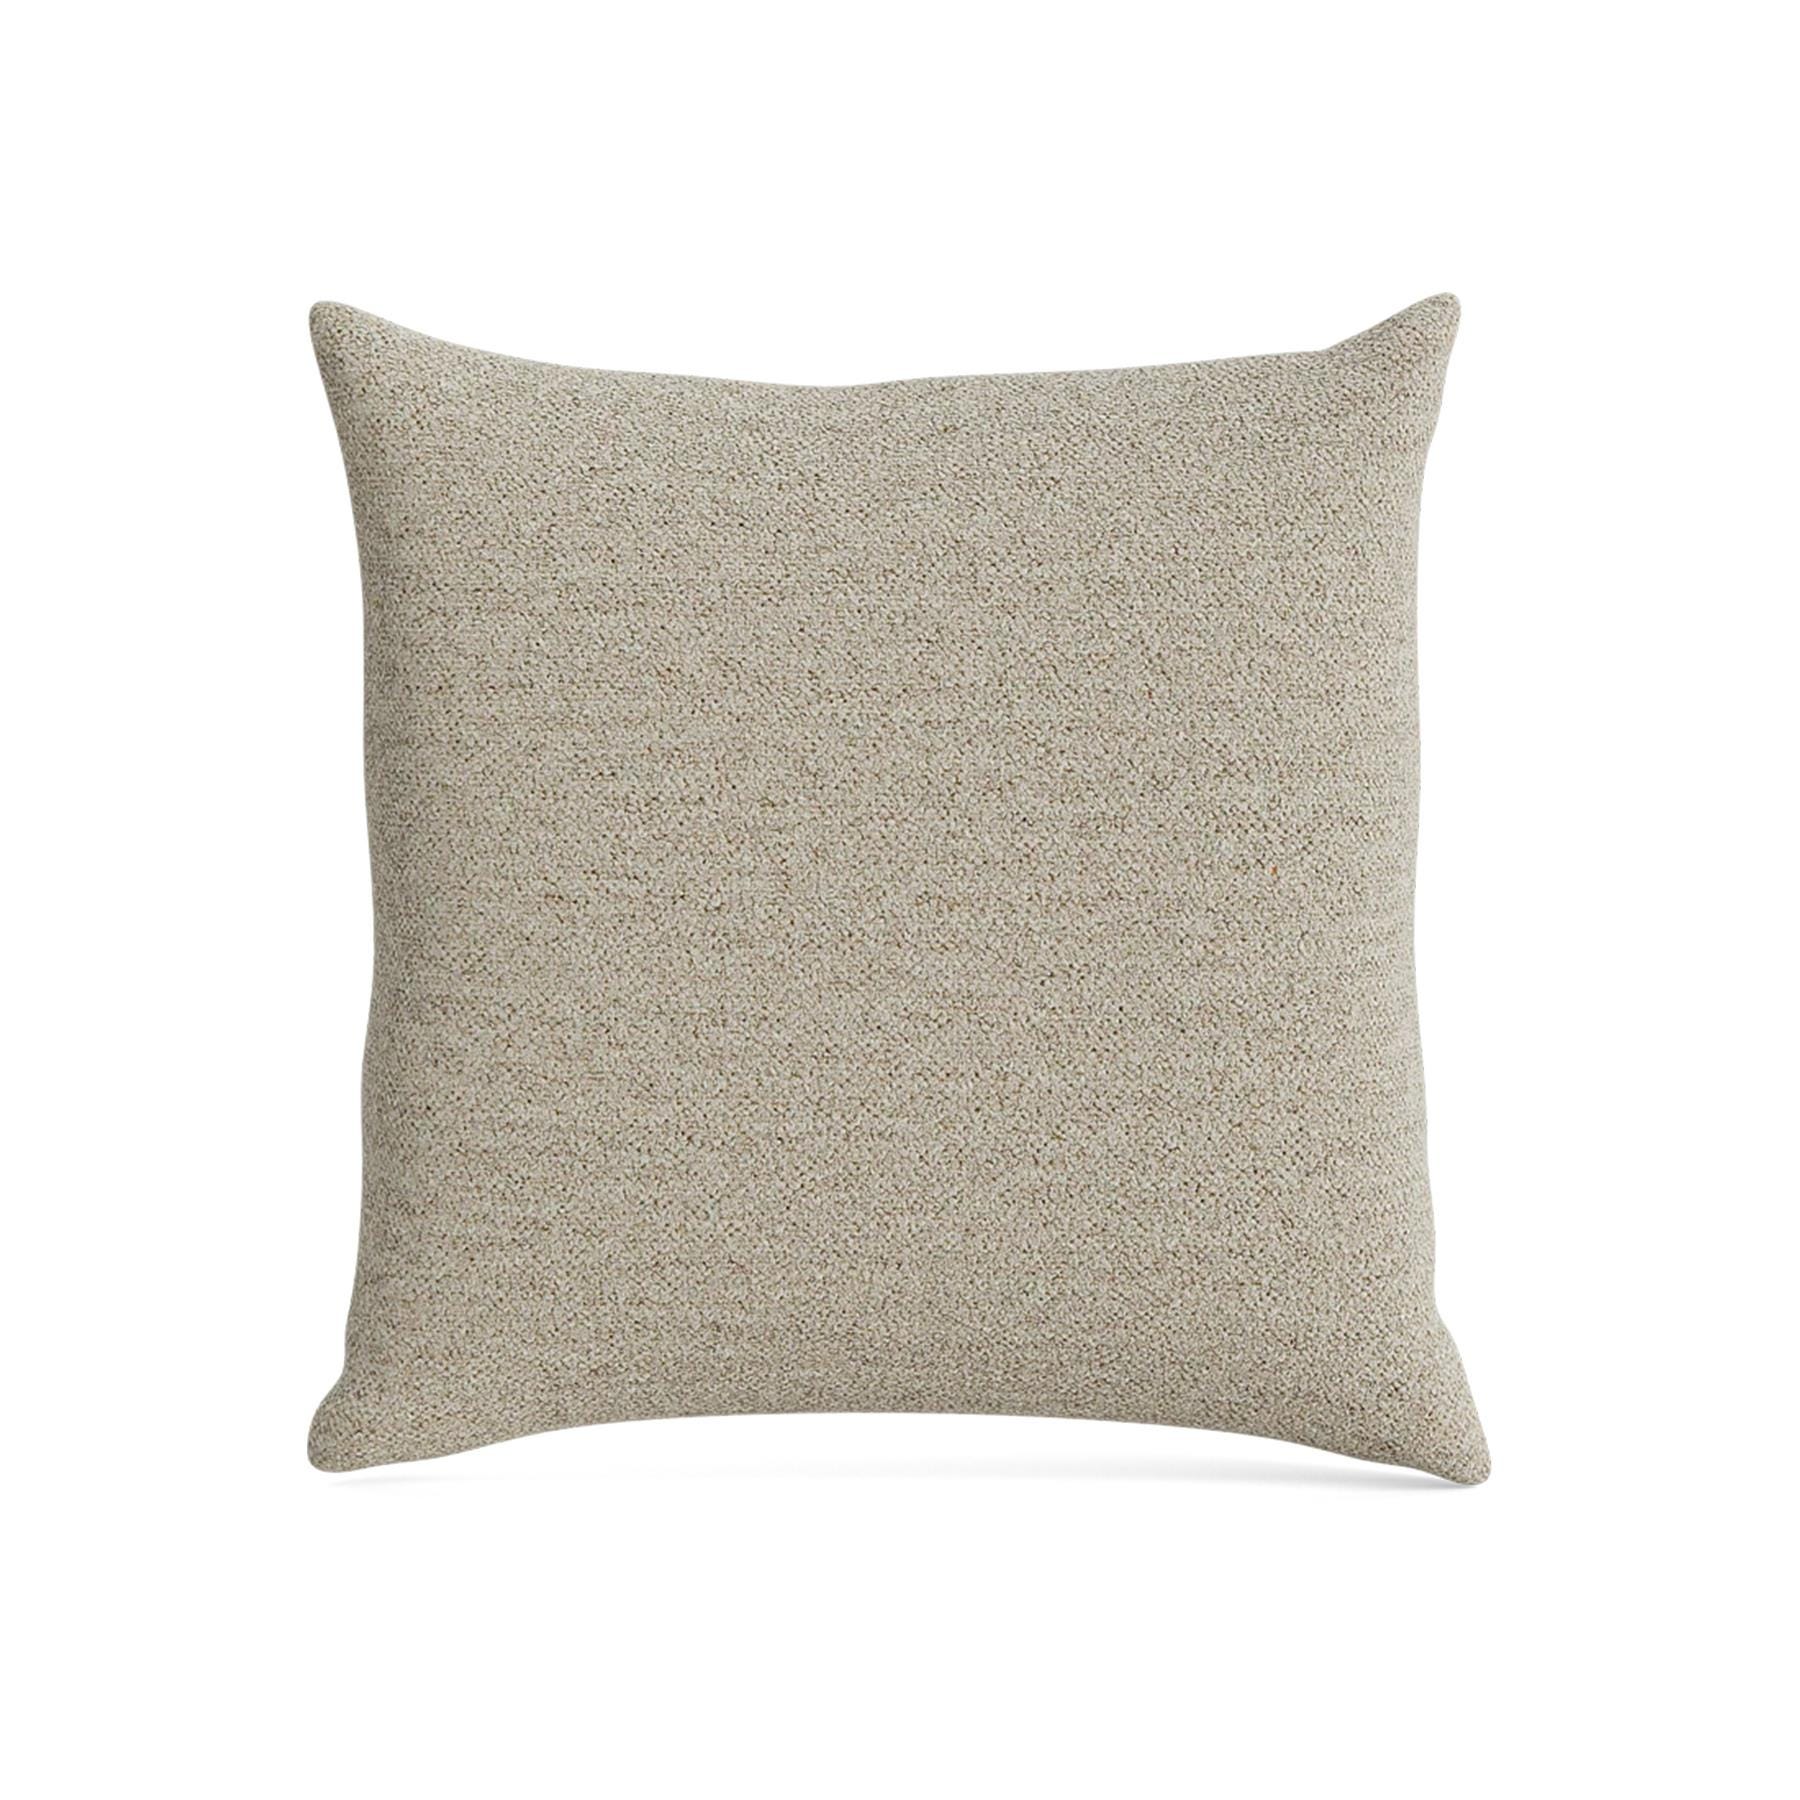 Make Nordic Pillow 50cmx50cm Nature Boucle 02 Down And Fibers Cream